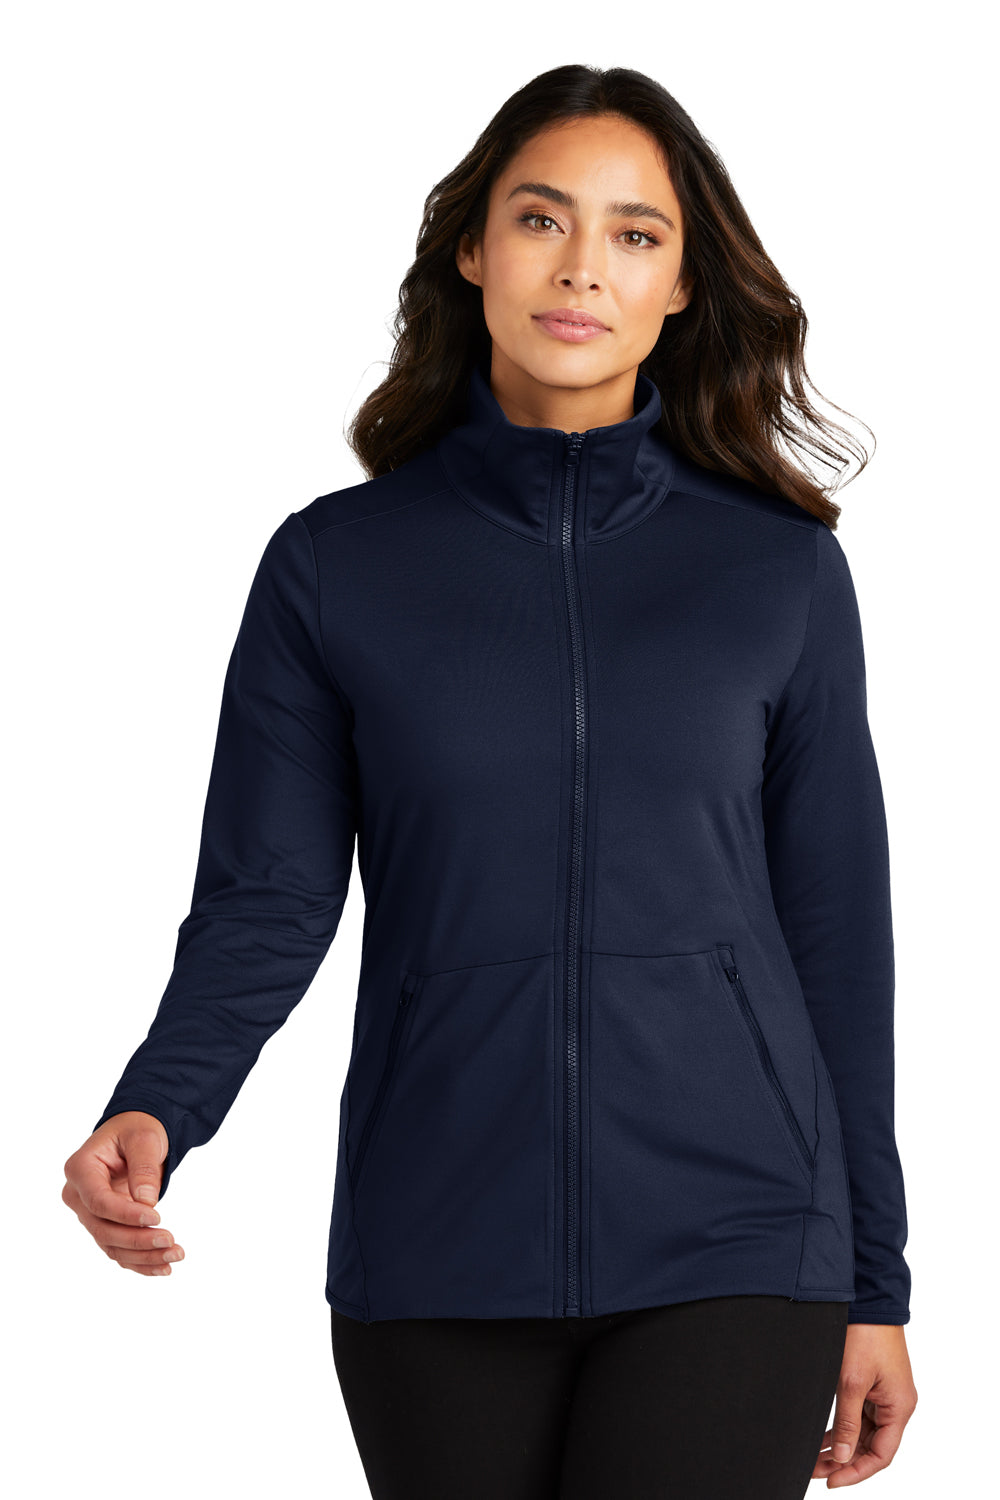 Port Authority LK595 Womens Accord Stretch Fleece Full Zip Jacket Navy Blue Front